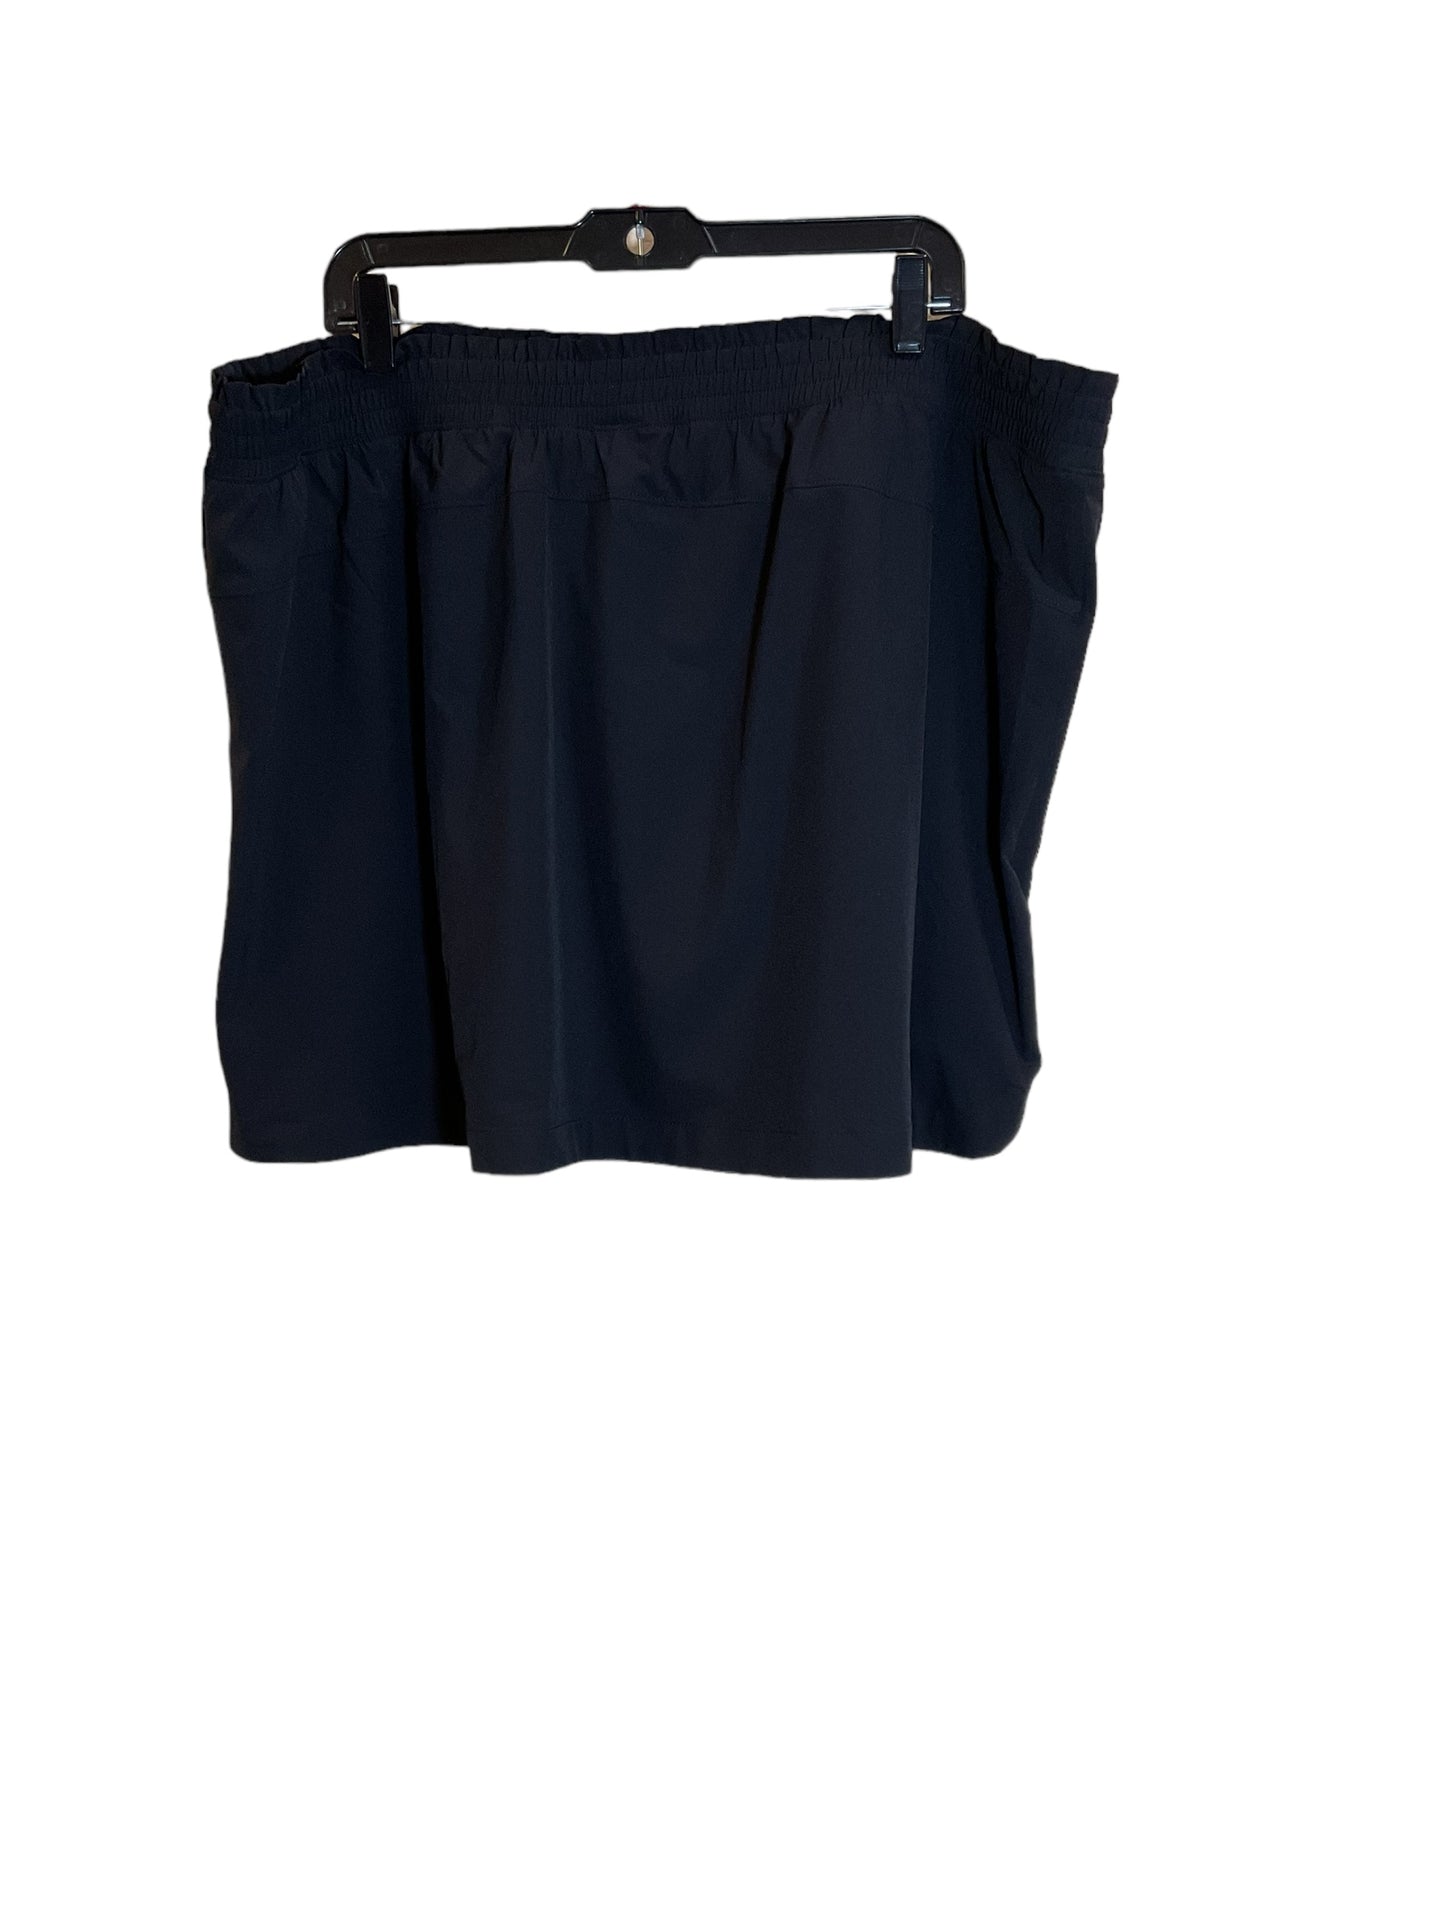 Athletic Skirt Skort By Tek Gear  Size: 2x